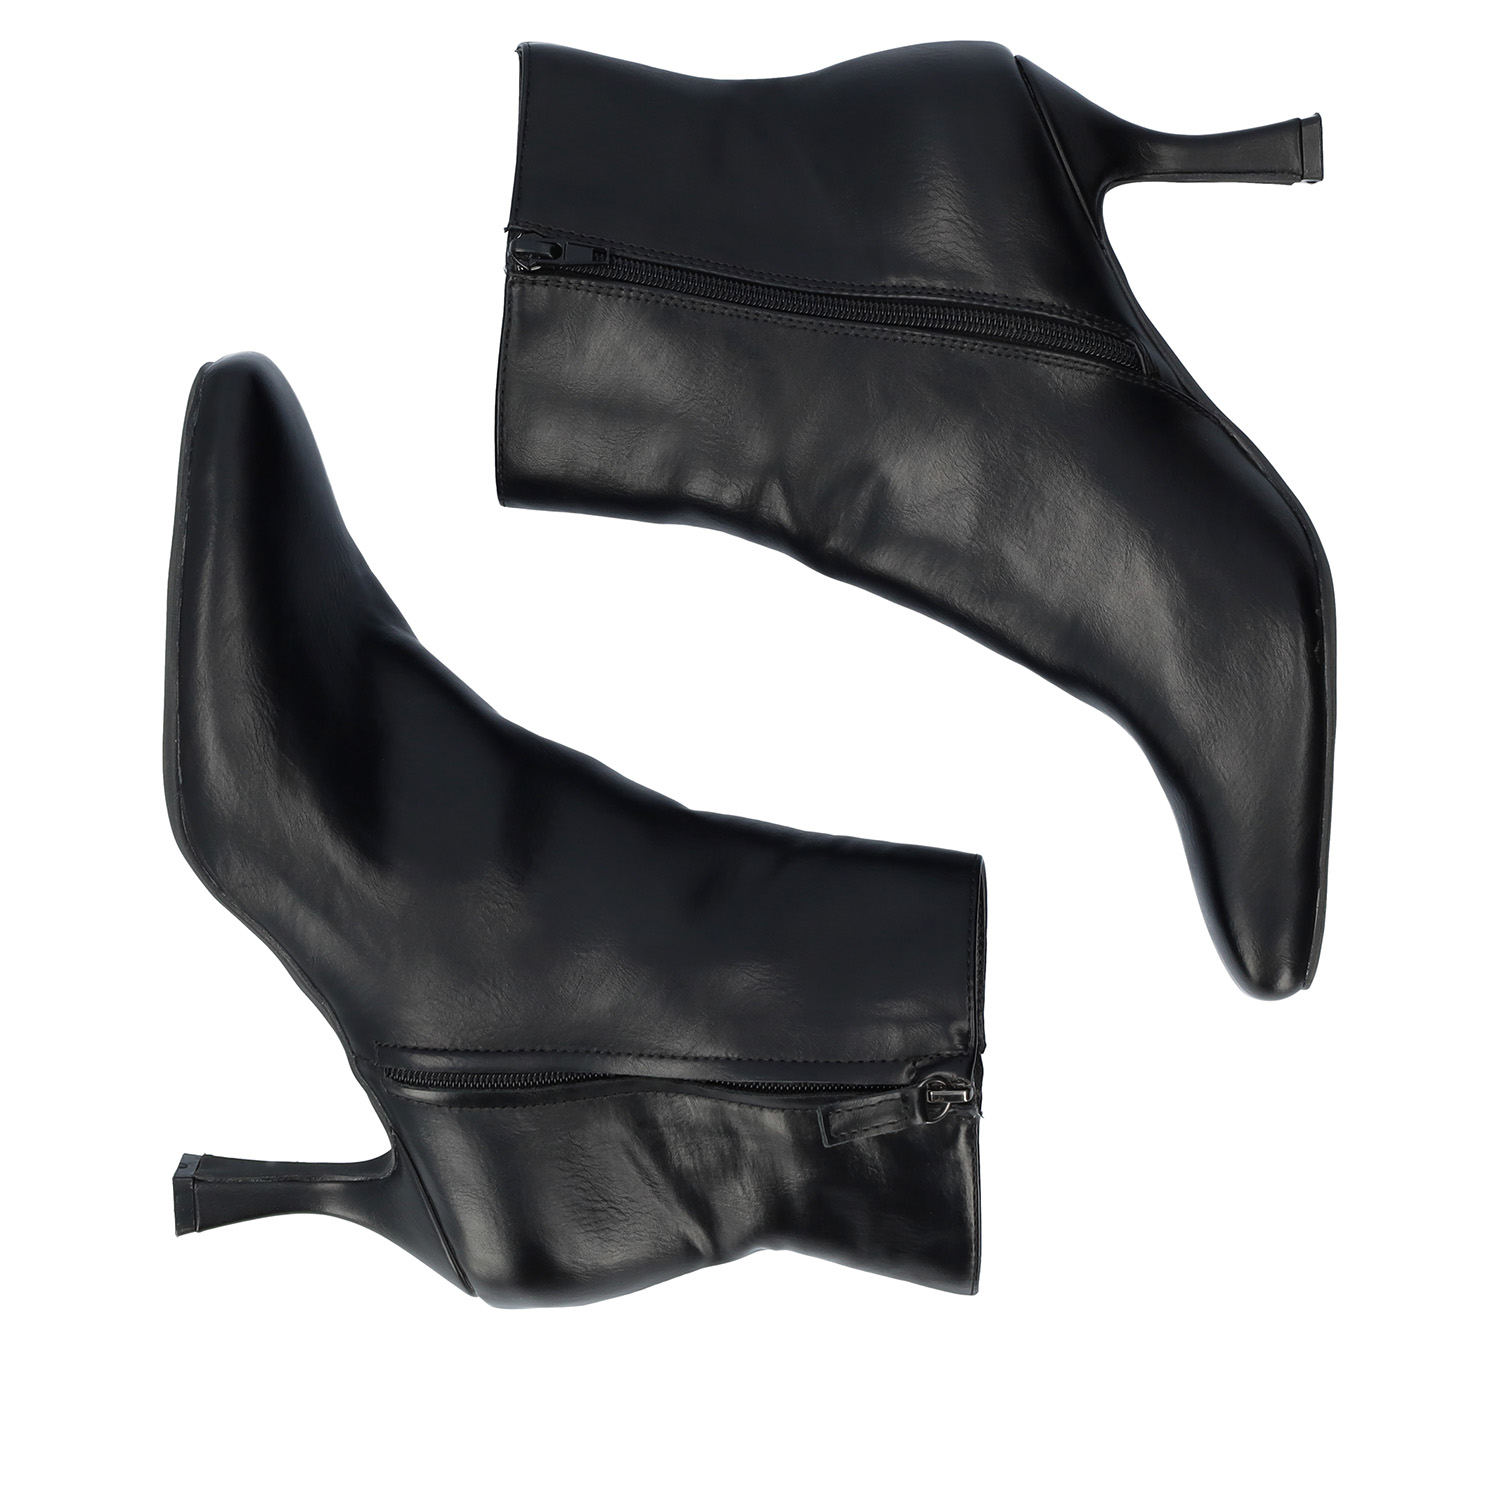 Mid-heel booties in black faux leather 